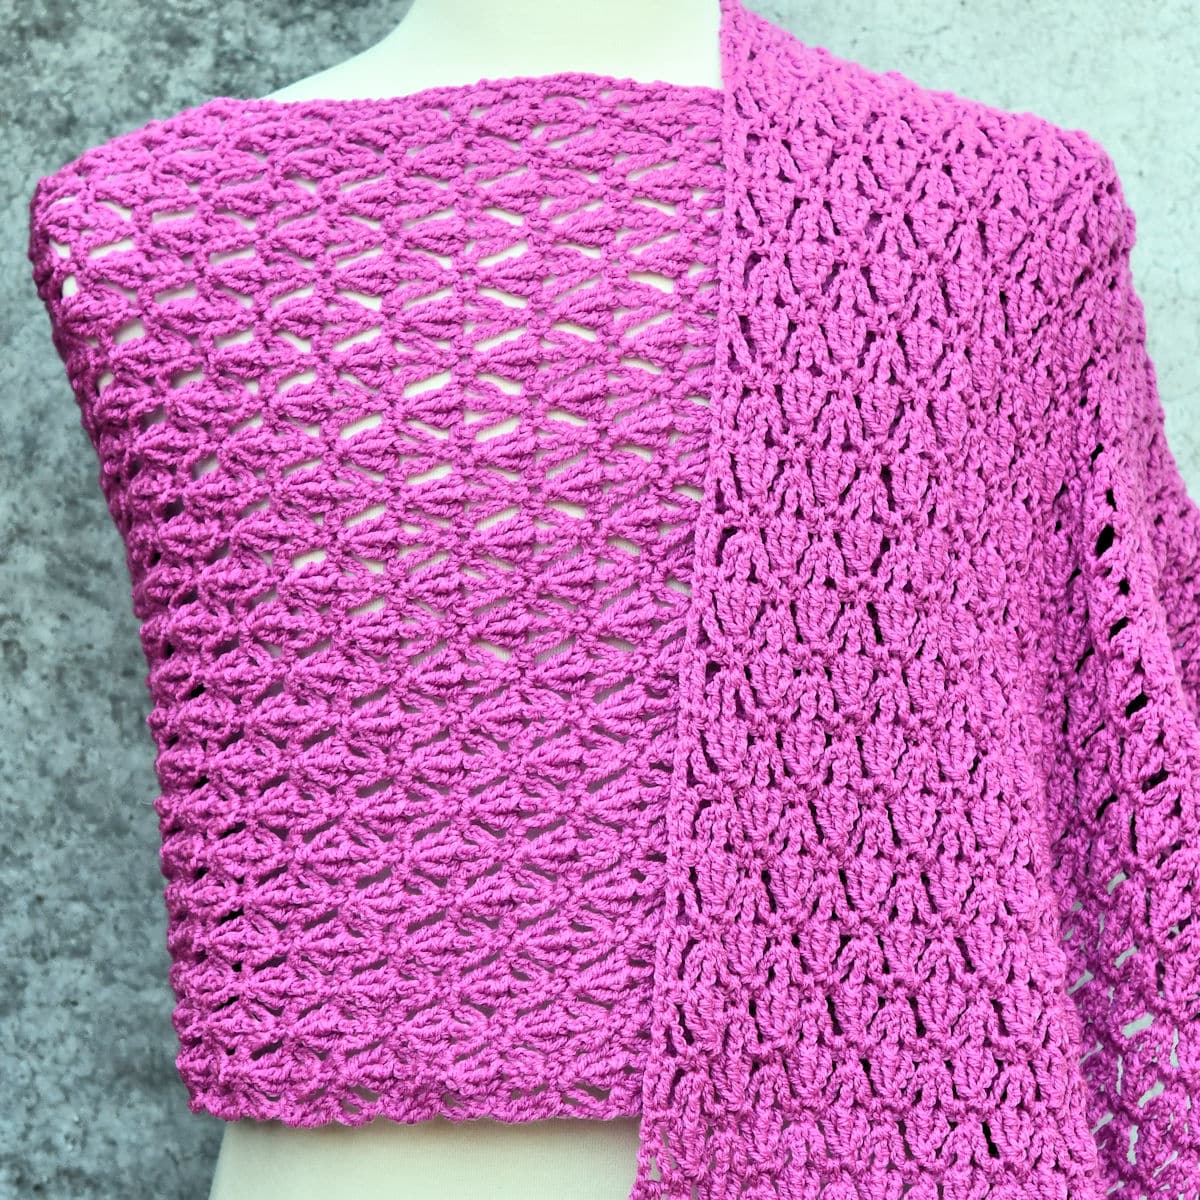 Labyrinth Crochet Lace Rectangle Shawl Pattern by Kim Guzman for Make It Crochet